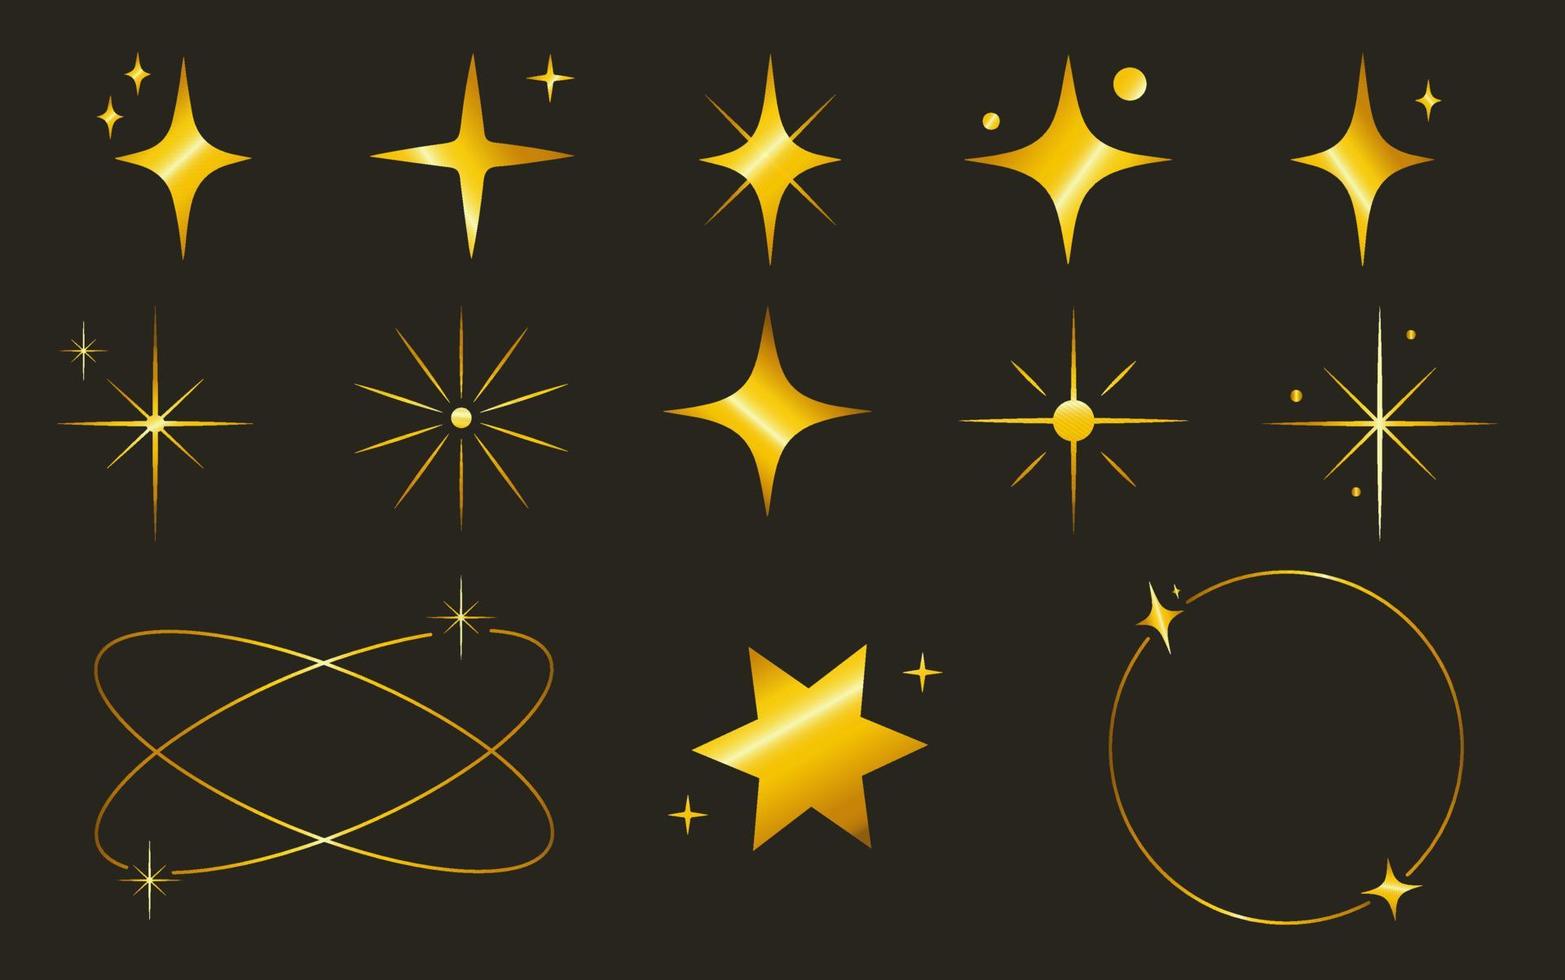 ano 2000 minimalista ouro geométrico elementos, abstrato formulários. simples Estrela e flor forma, básico forma, na moda moderno gráfico elemento vetor conjunto